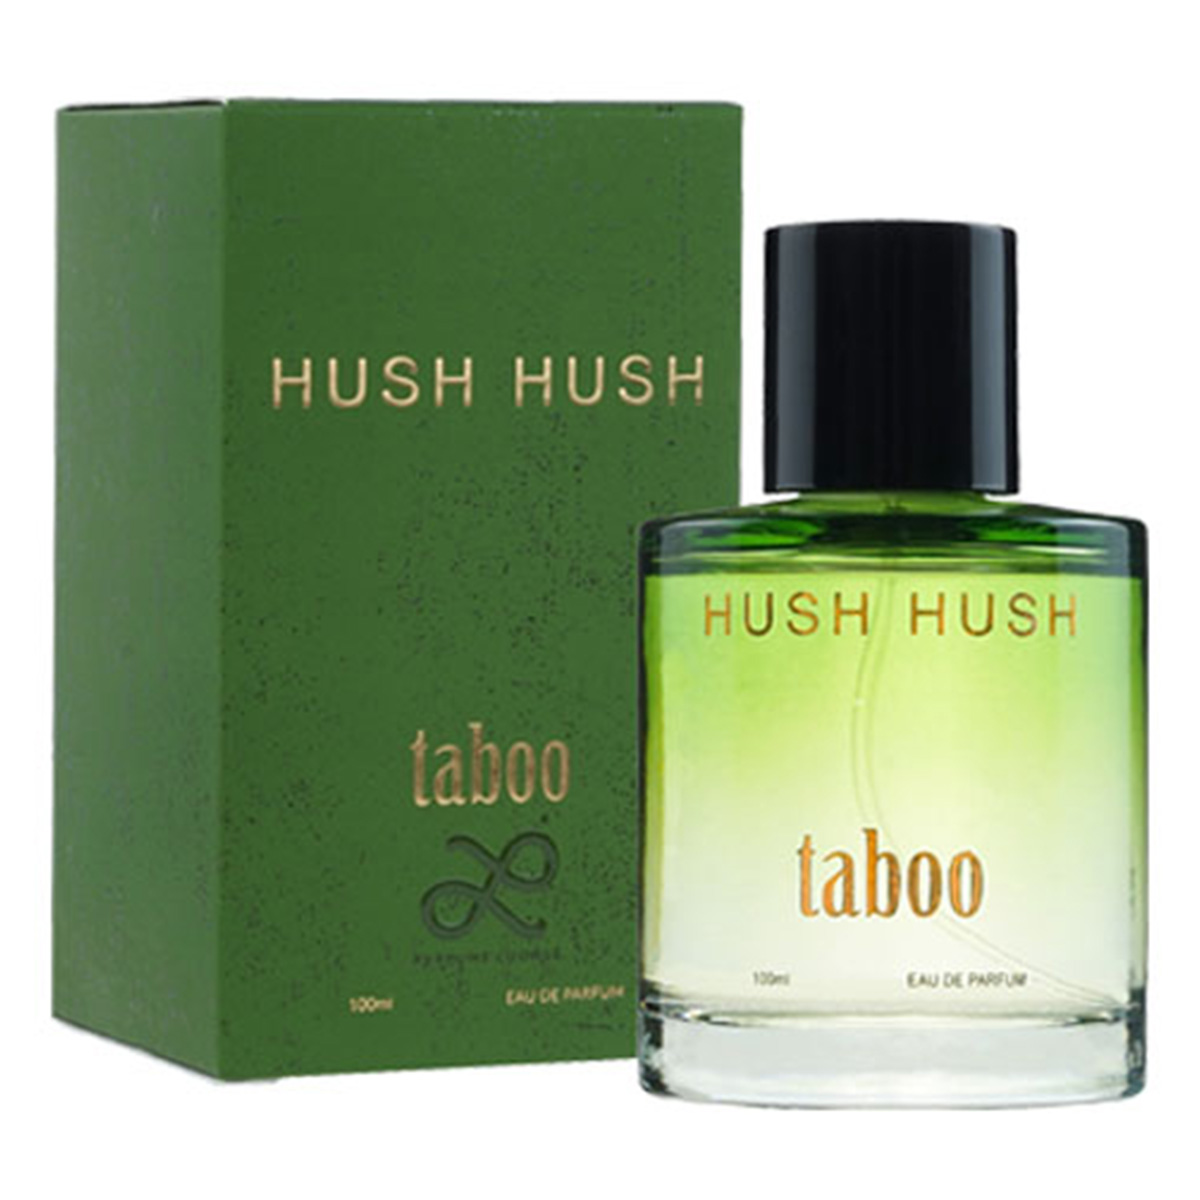 Perfume Lounge Taboo Hush Hush Eau De Parfum, 100ml